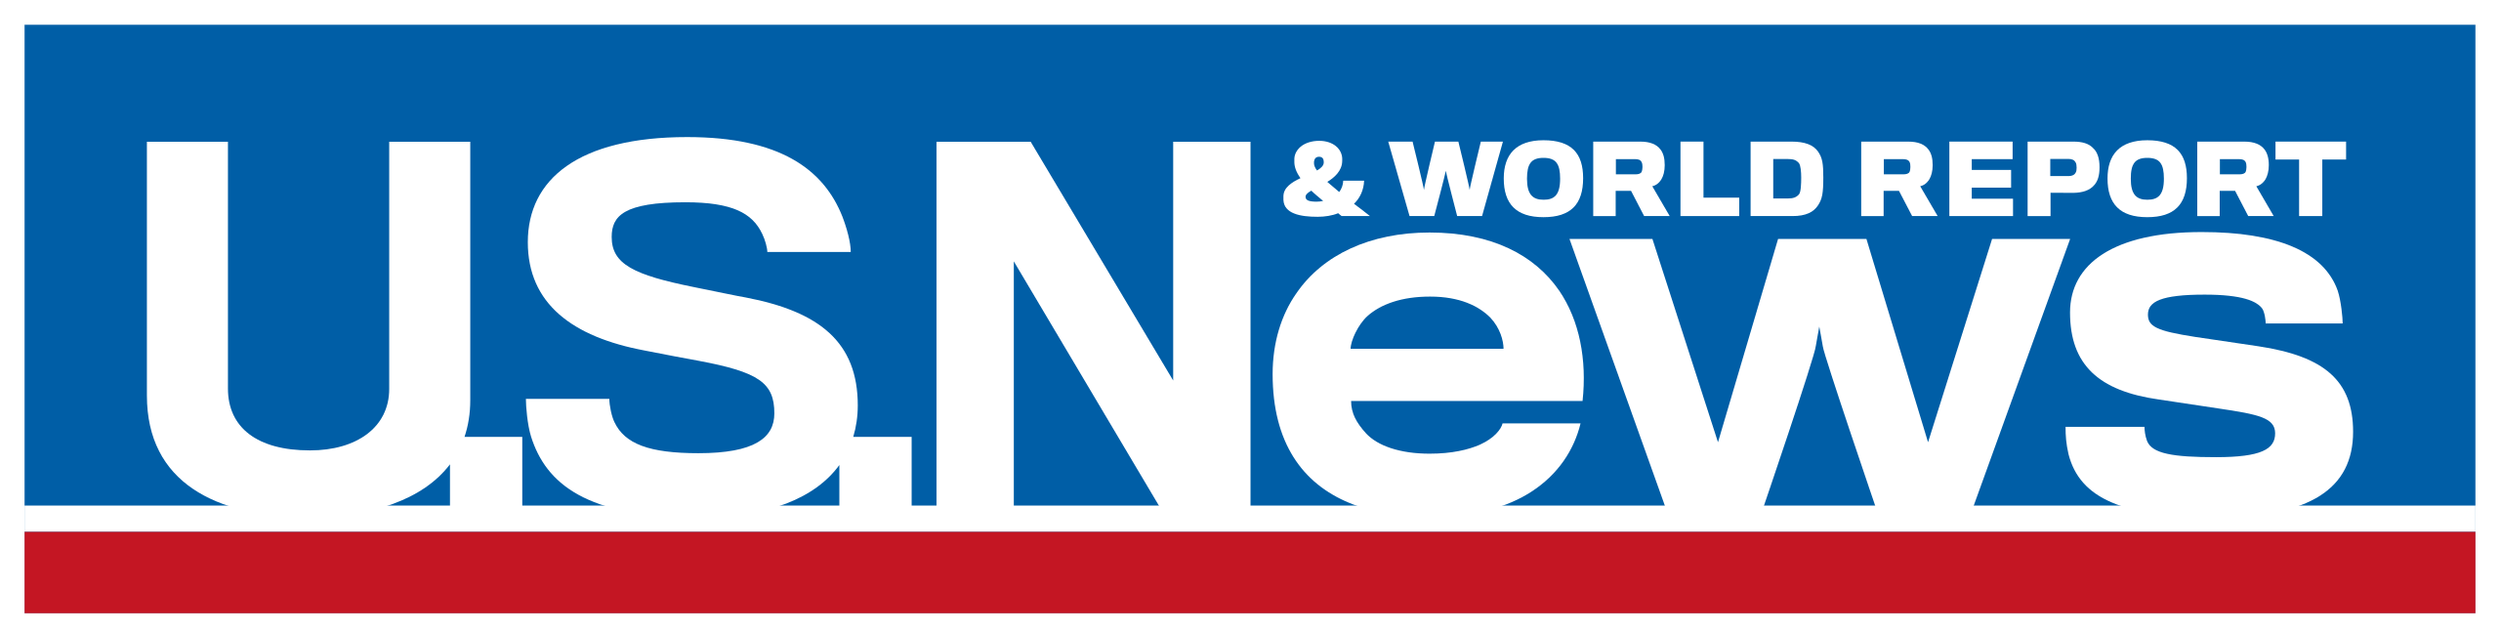 Media Logo_U.S. News & World Report.png